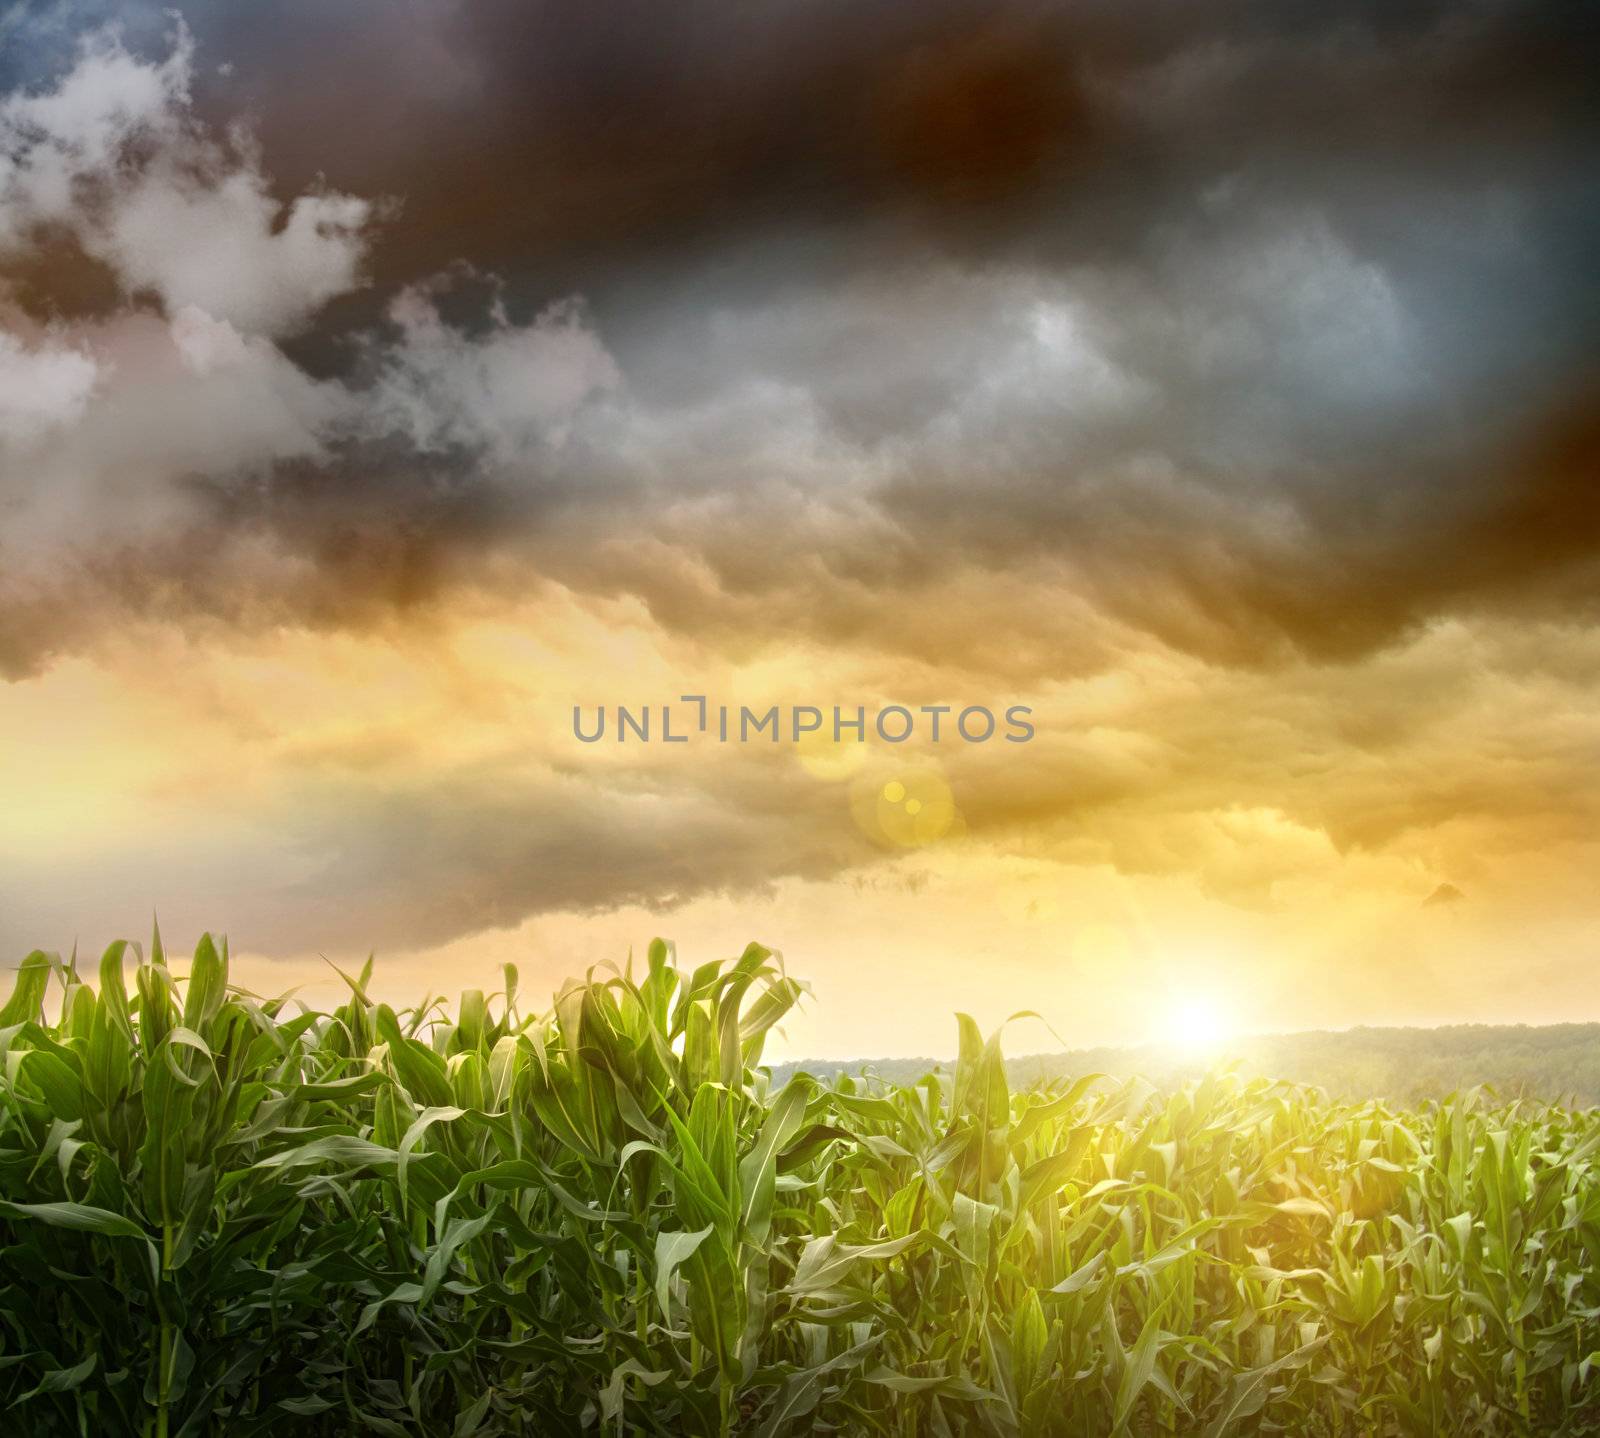 Dark skies looming over corn fields at sunset